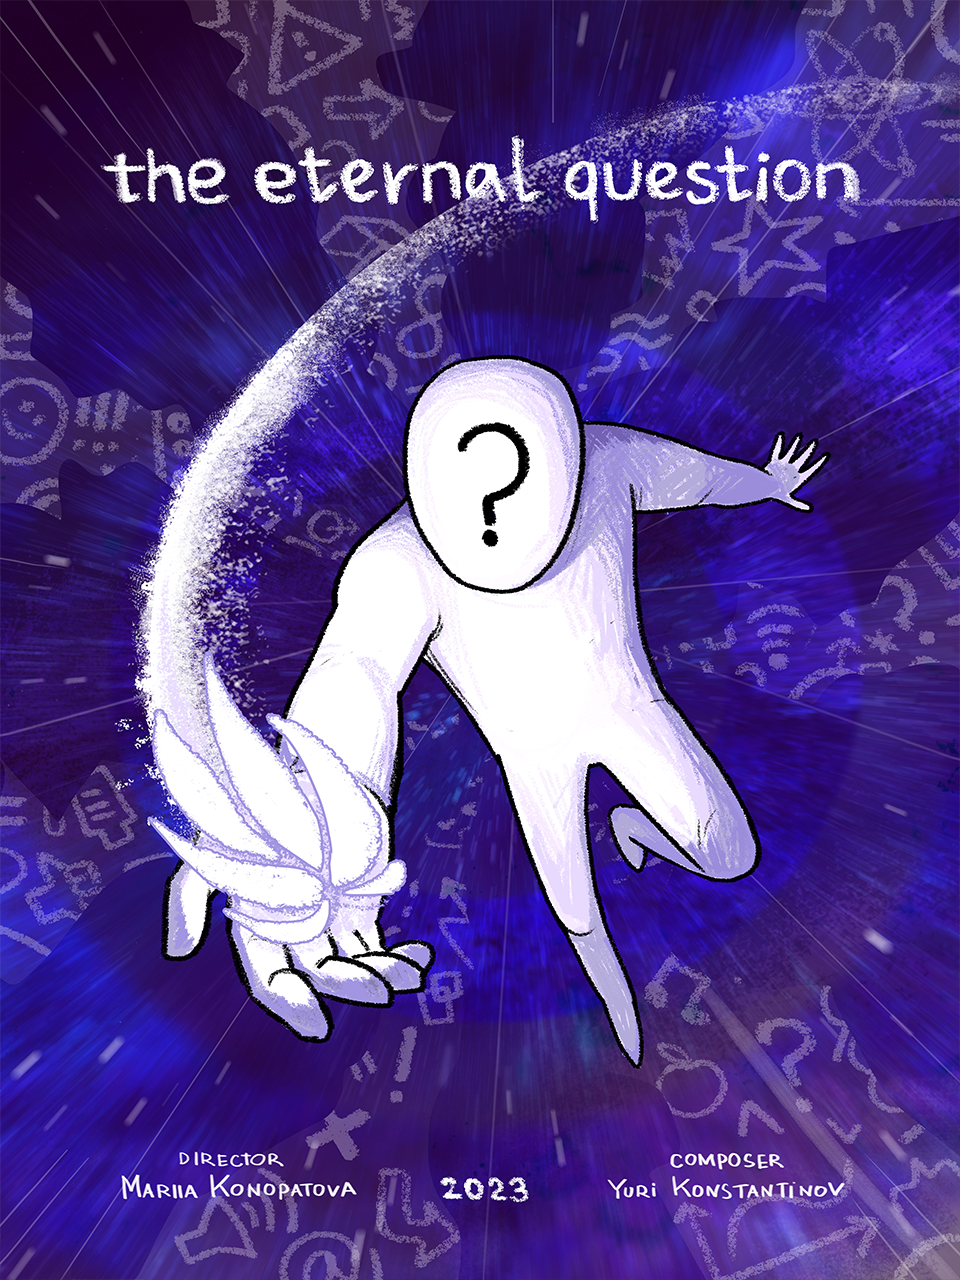 THE ETERNAL QUESTION